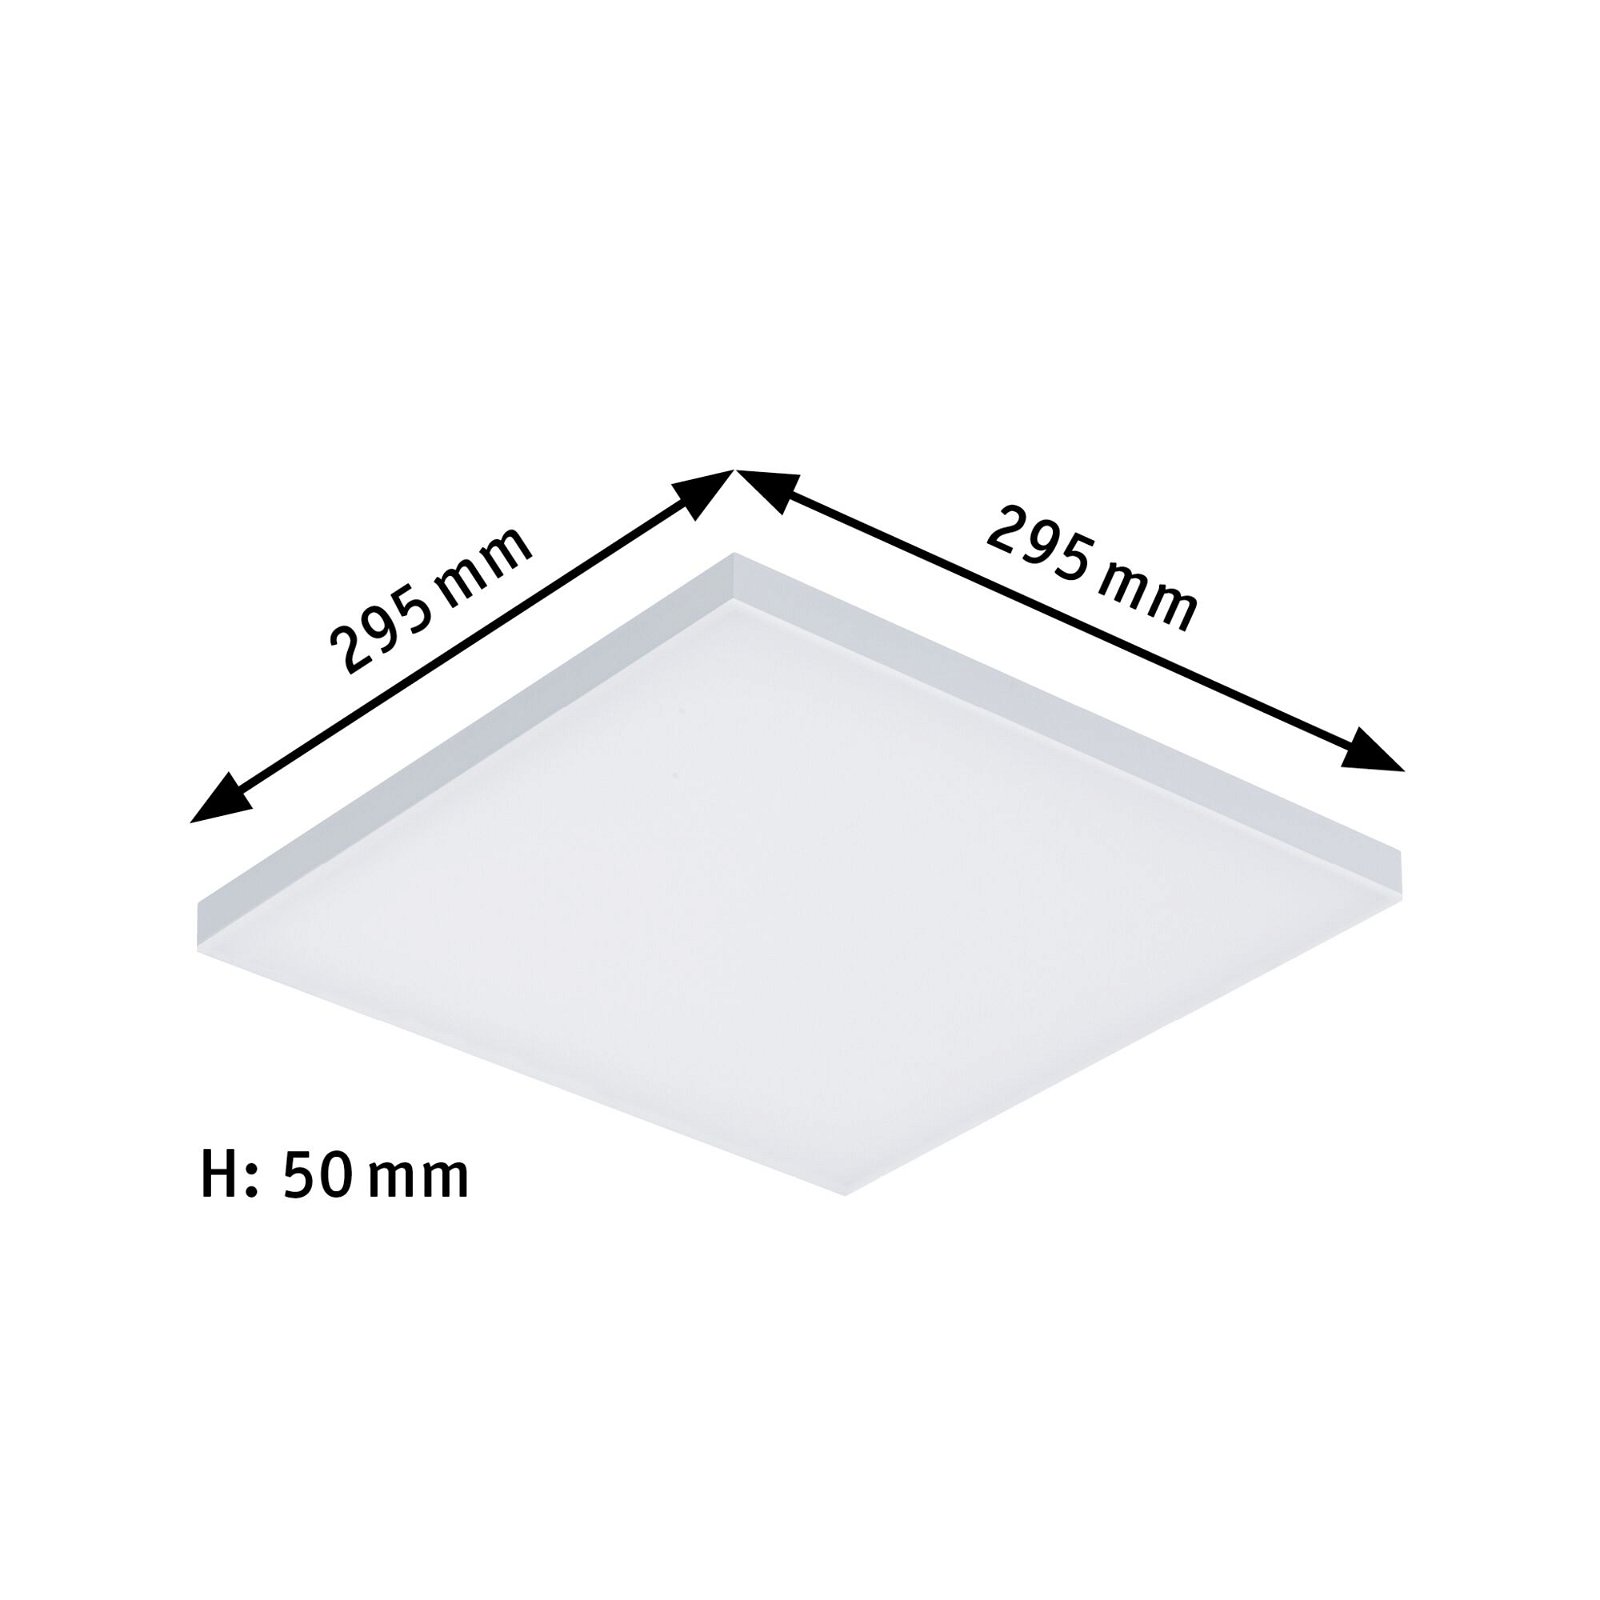 LED Panel Smart Home Zigbee Velora square 295x295mm Tunable White Matt white dimmable